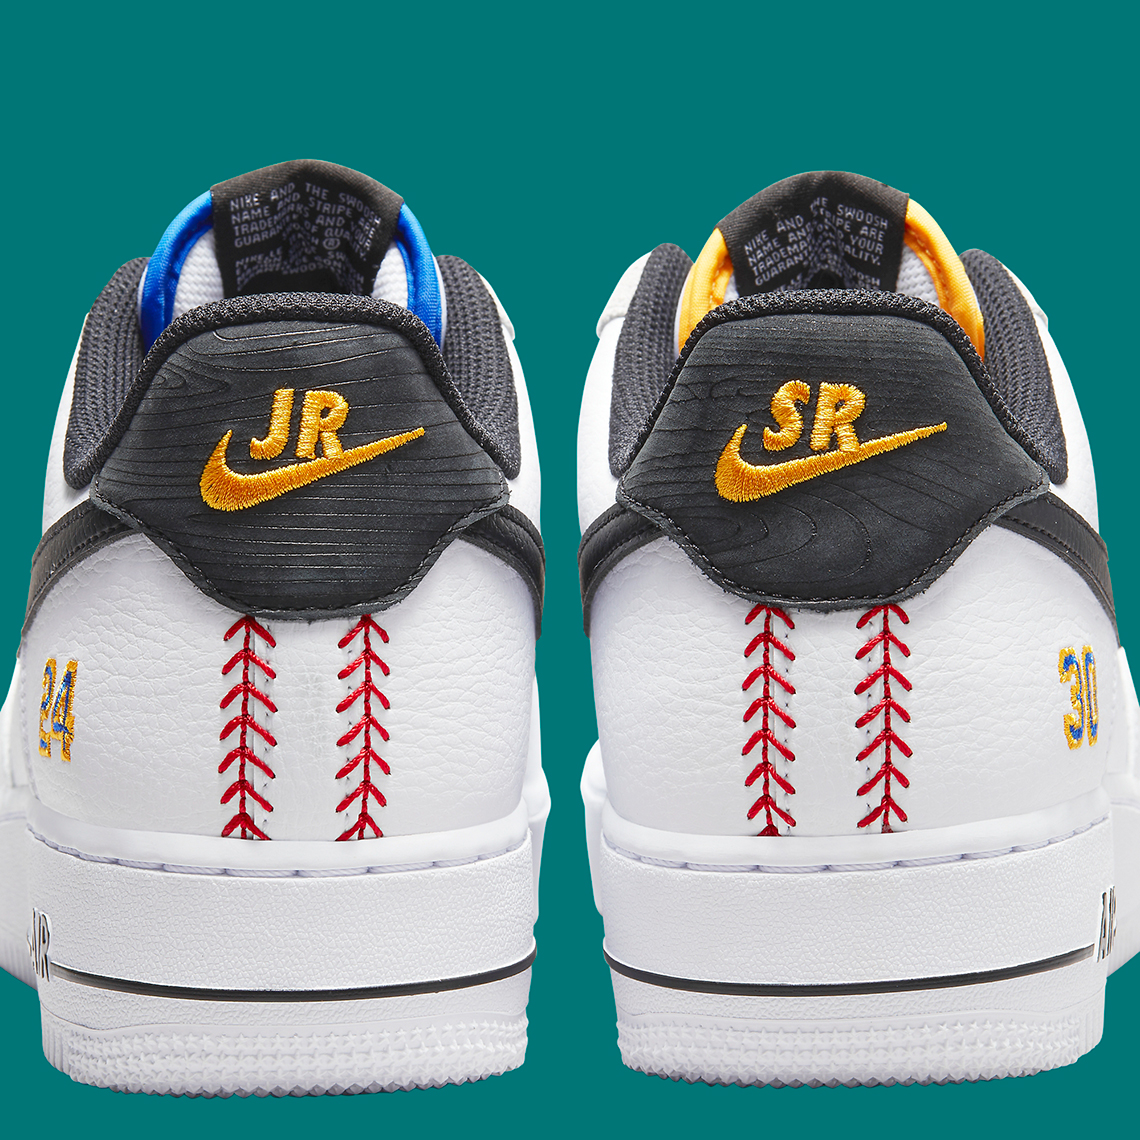 Ken Griffey Jr. Wears Retro Nike Shoes at Home Run Derby - Sports